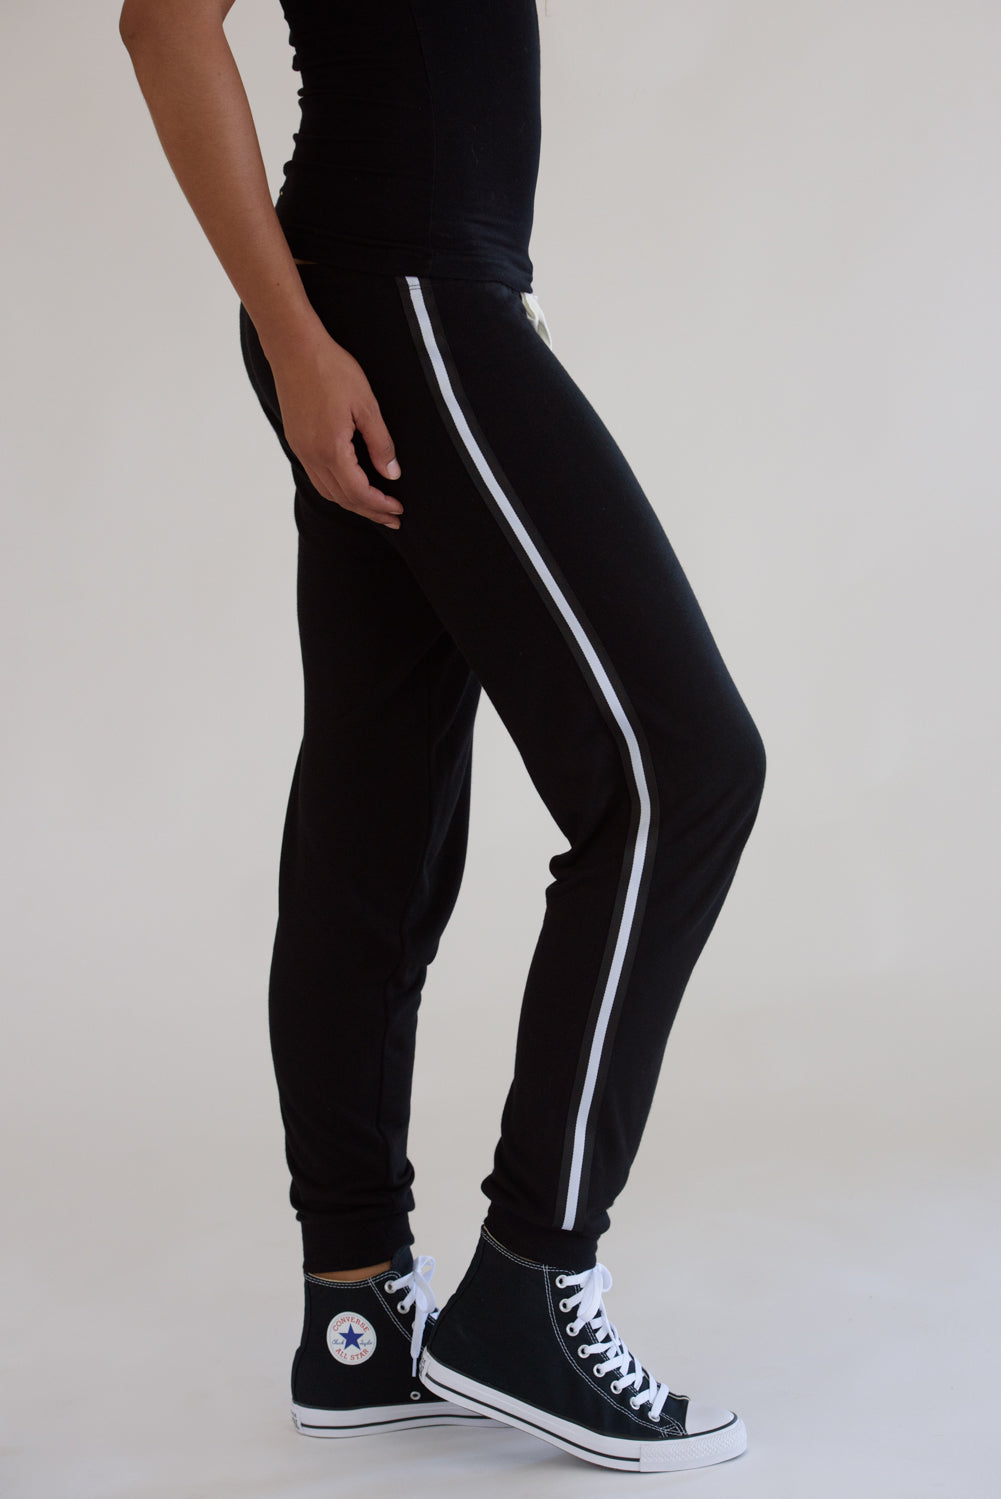 Black Sweatpants w/ Black and White Taping